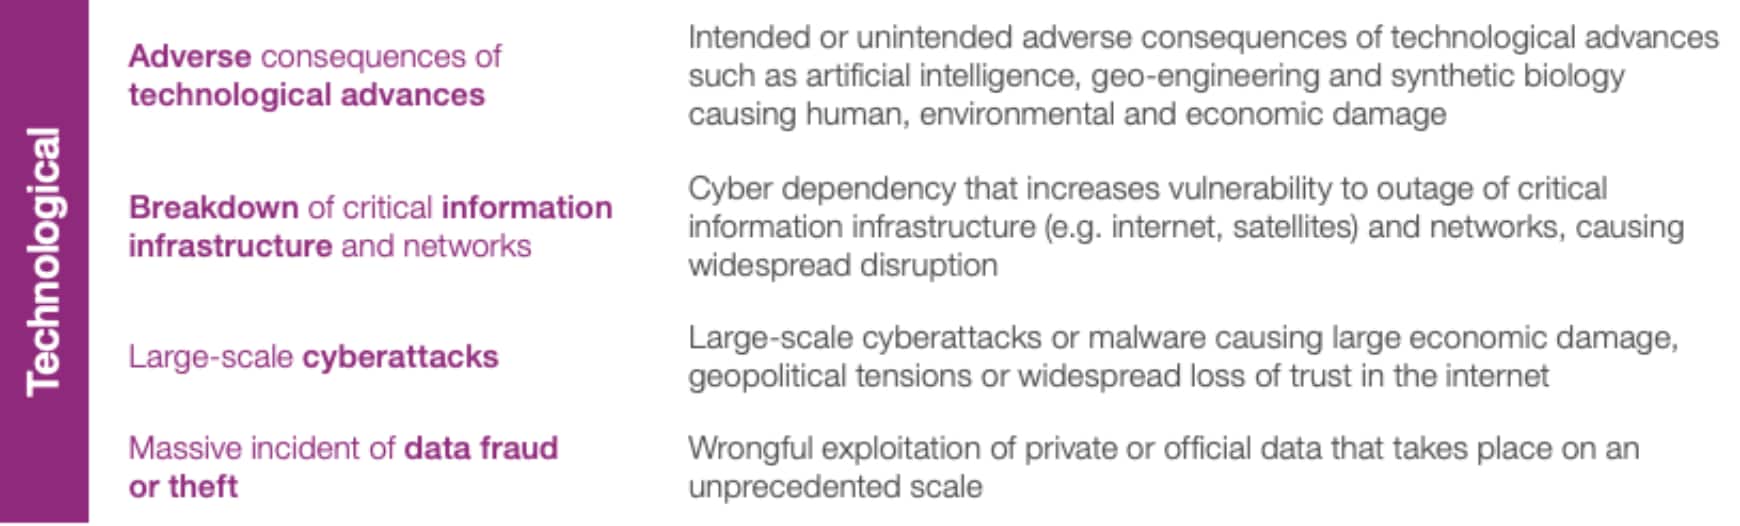 WEF technological risk categorization